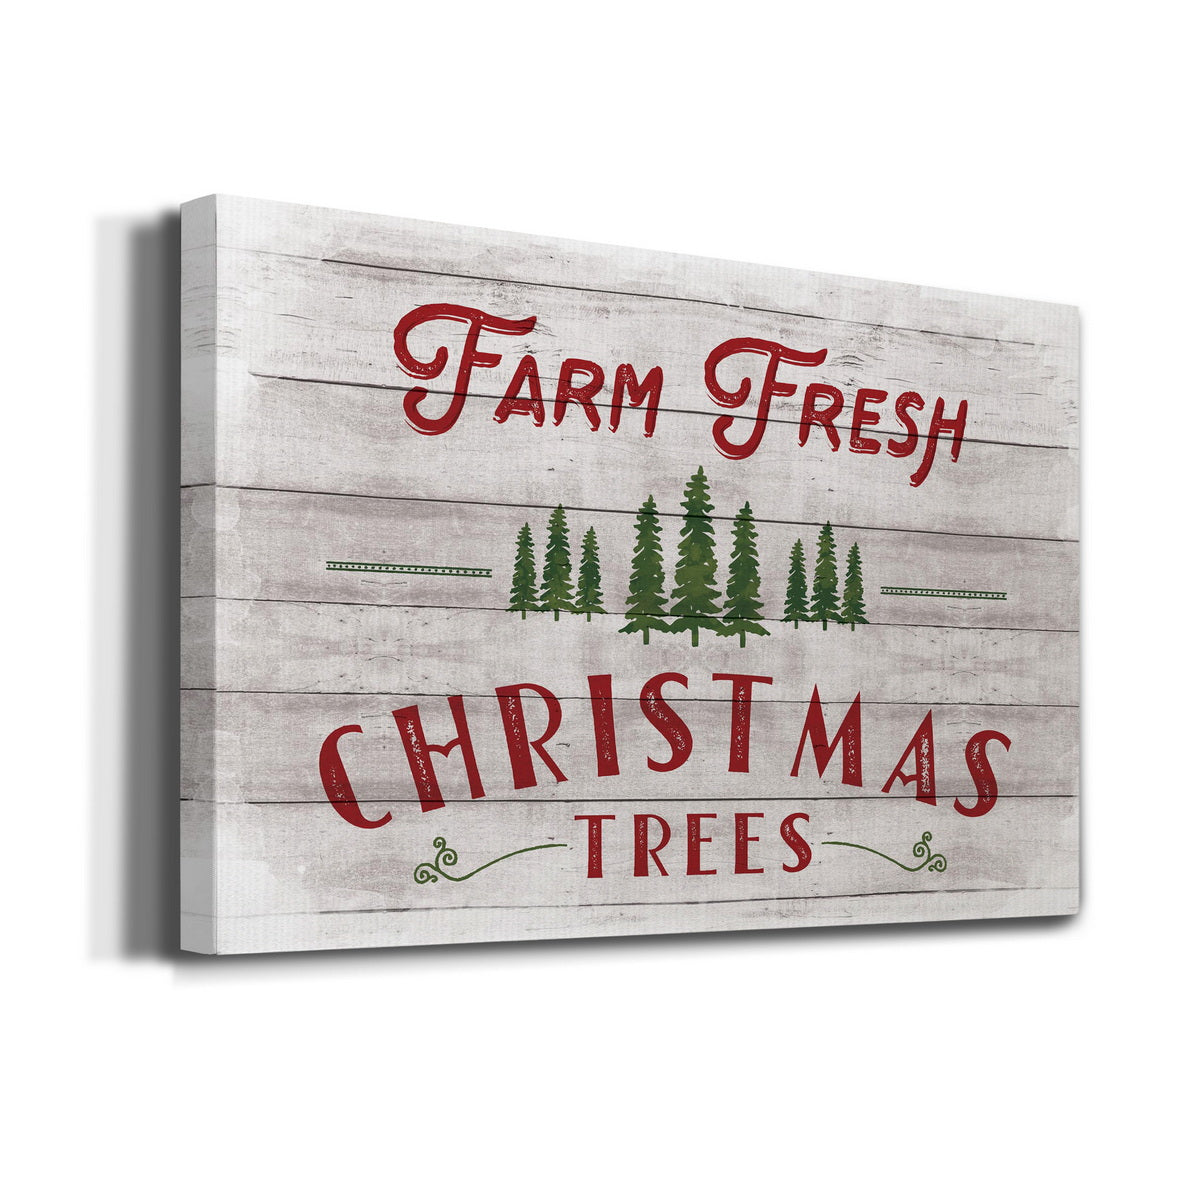 Farm Fresh Christmas Trees - Premium Gallery Wrapped Canvas  - Ready to Hang